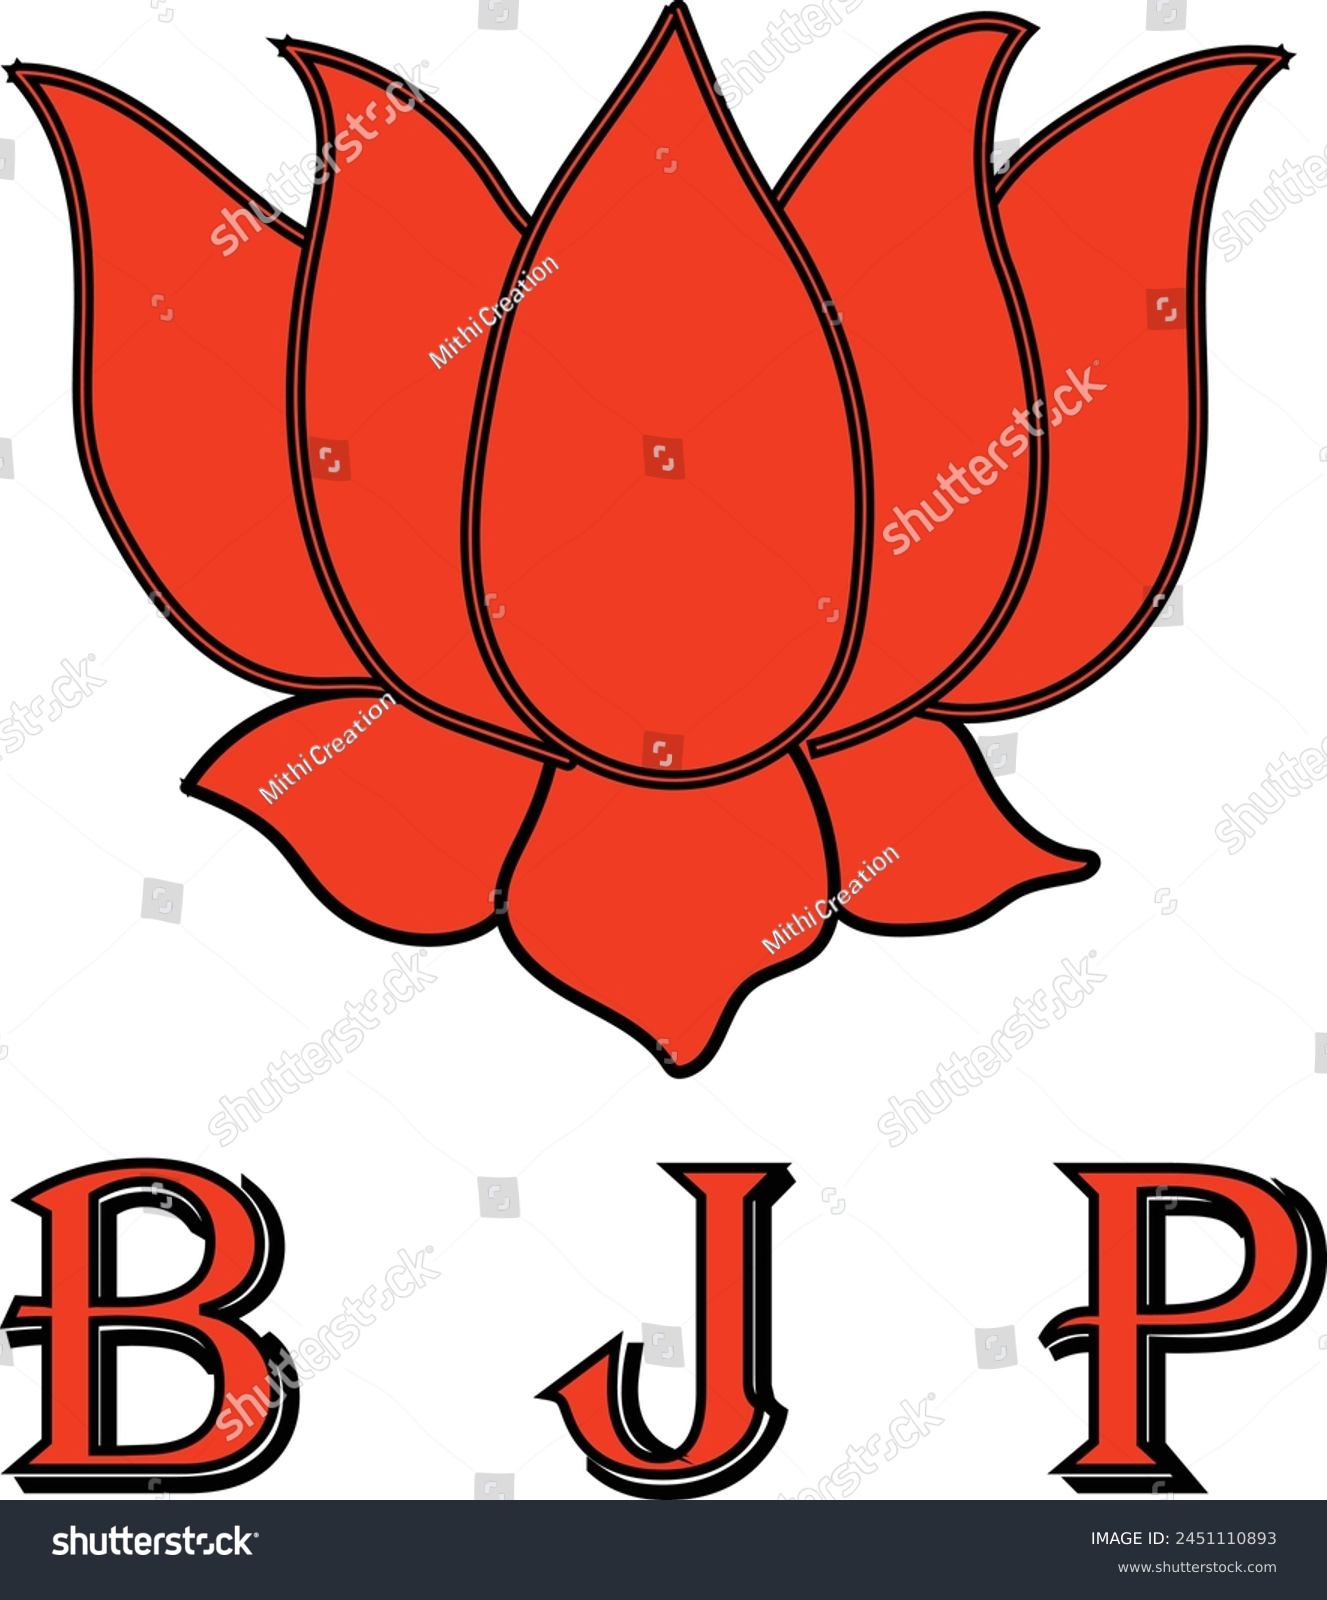 SVG of Bjp Lotus Icon Vector Image svg